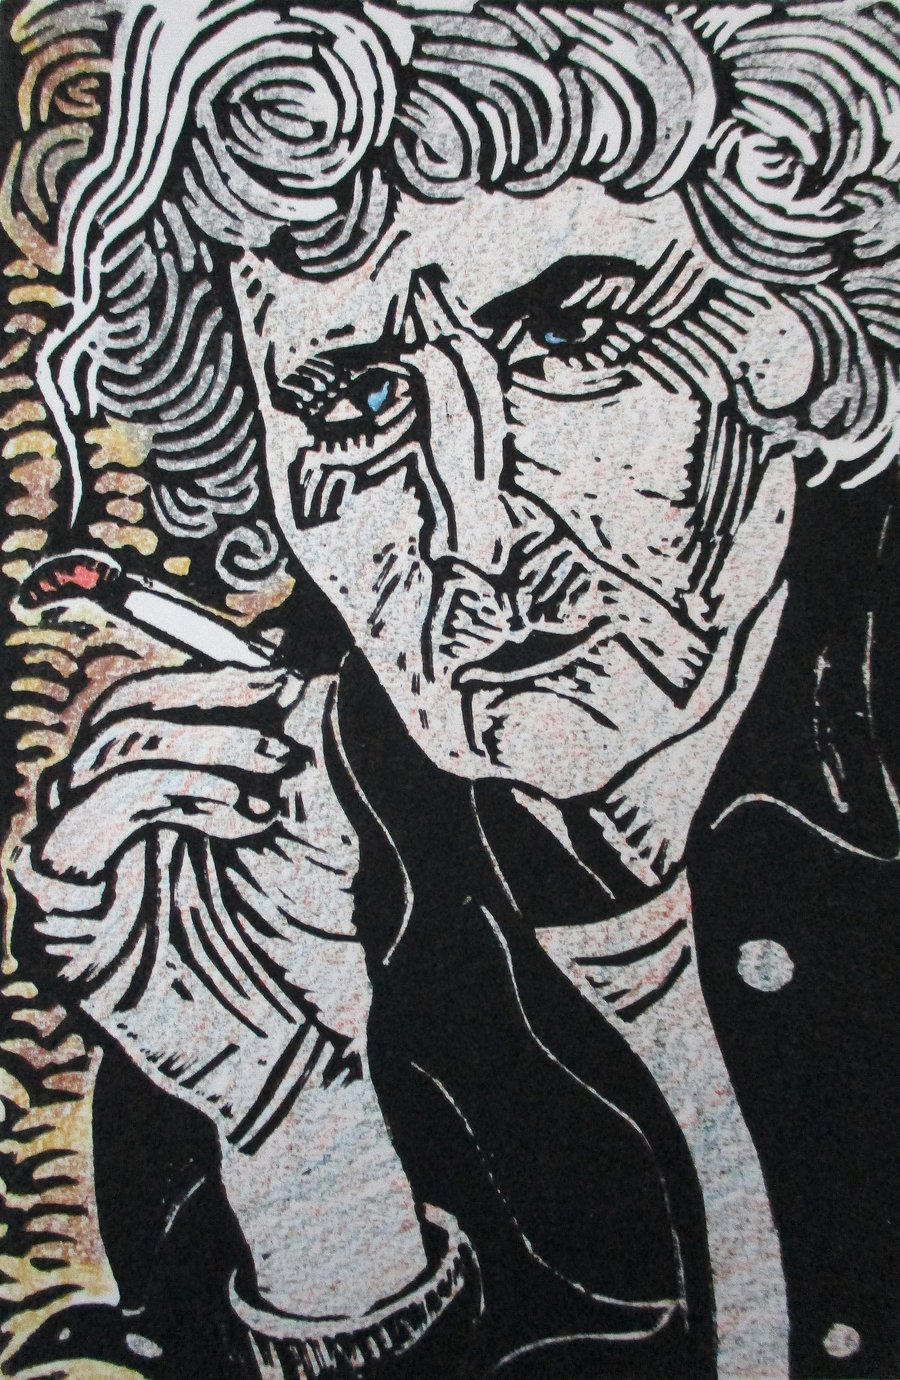 Portrait of Maggi Hambling Original Hand Pressed Linocut Print Limited Edition